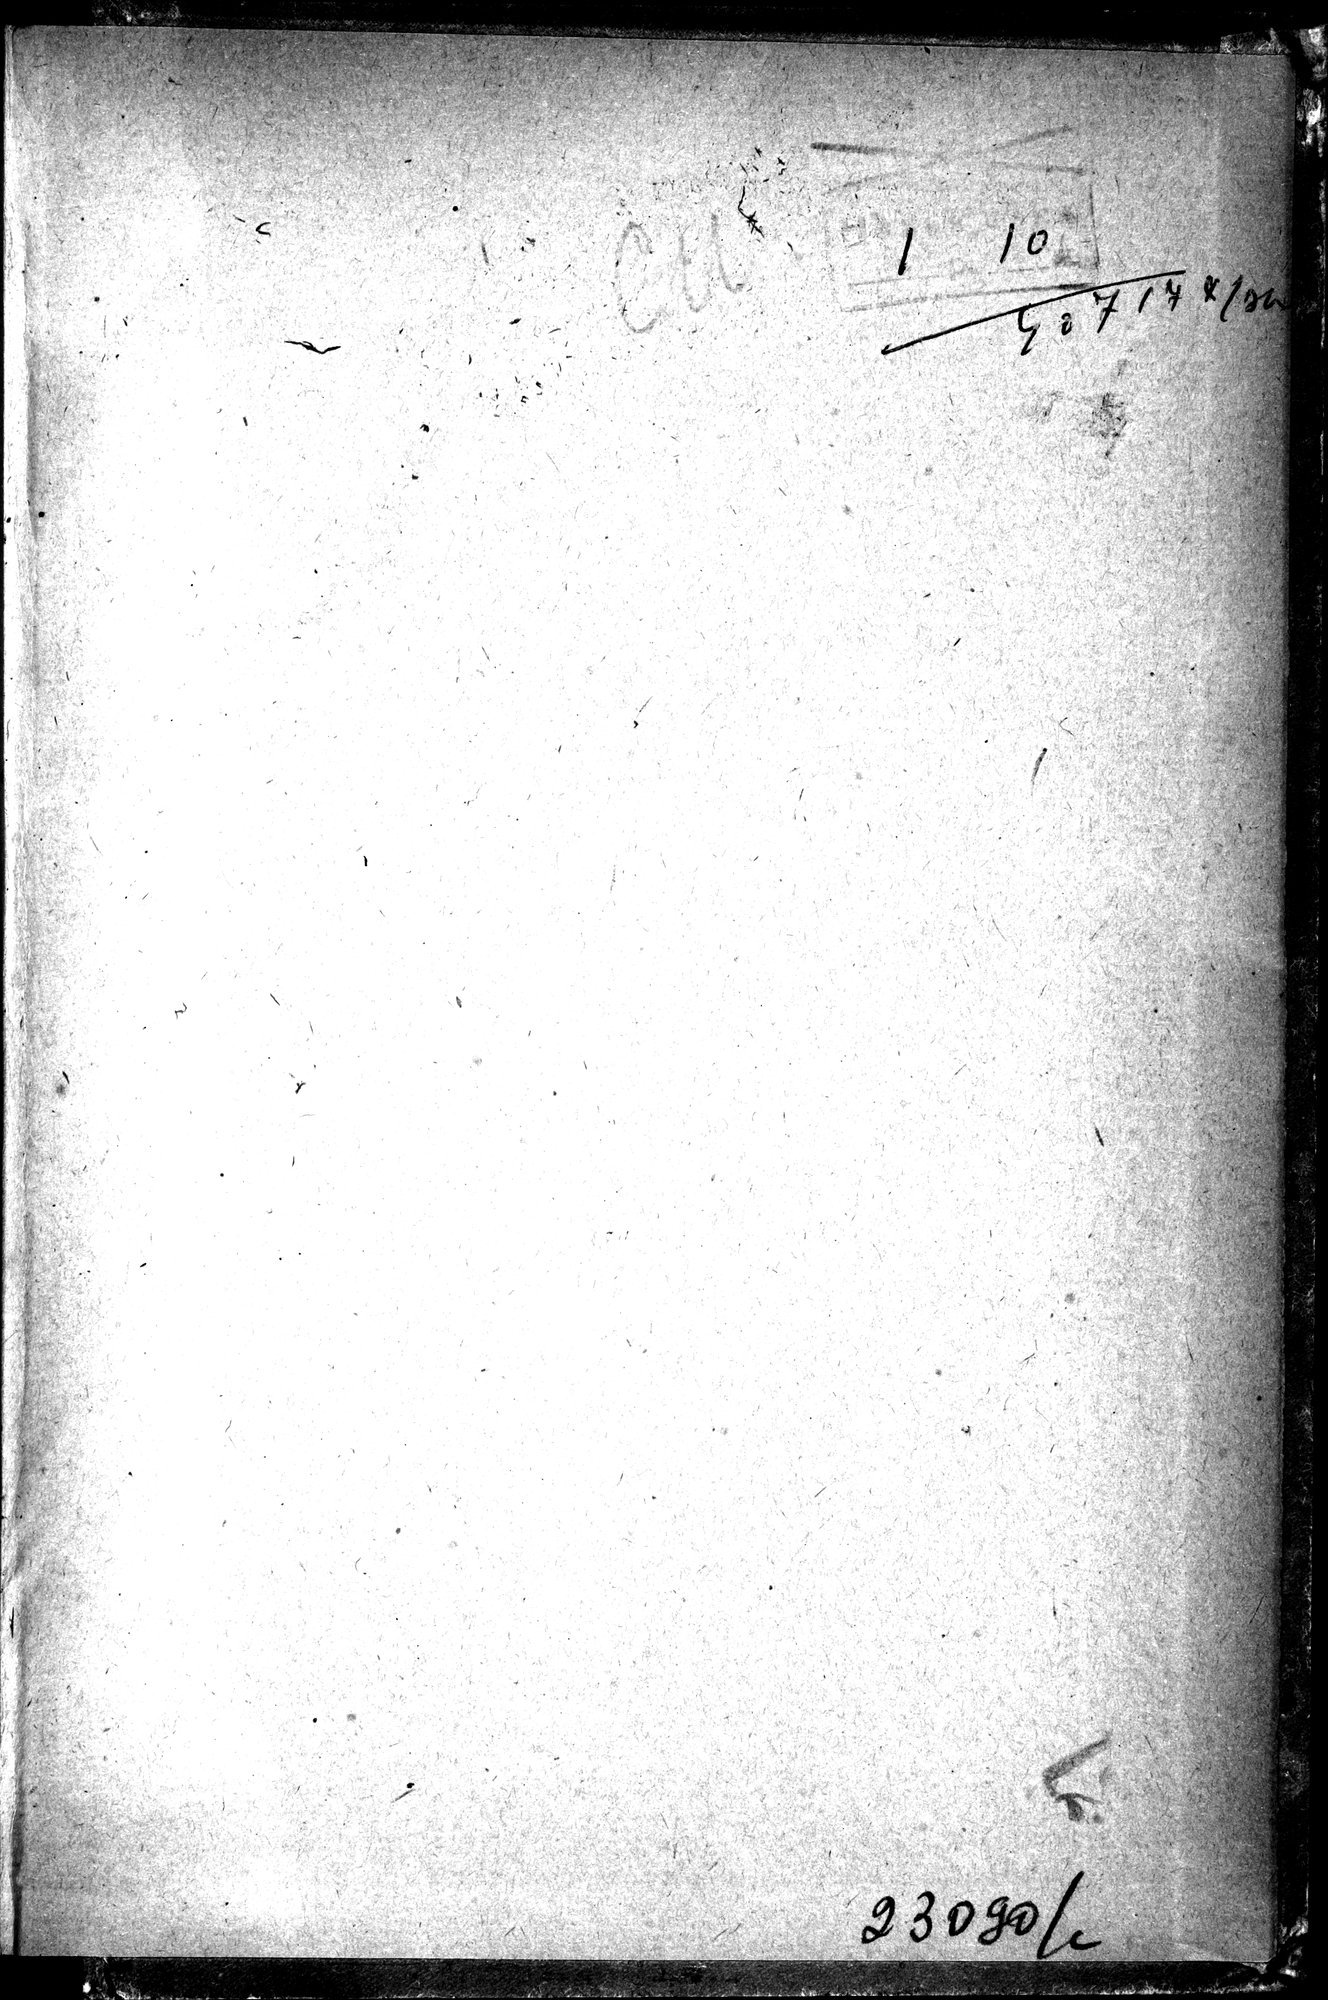 Puteshestvie v Tian' - Shan' v 1856-1857 godakh : vol.1 / Page 283 (Grayscale High Resolution Image)